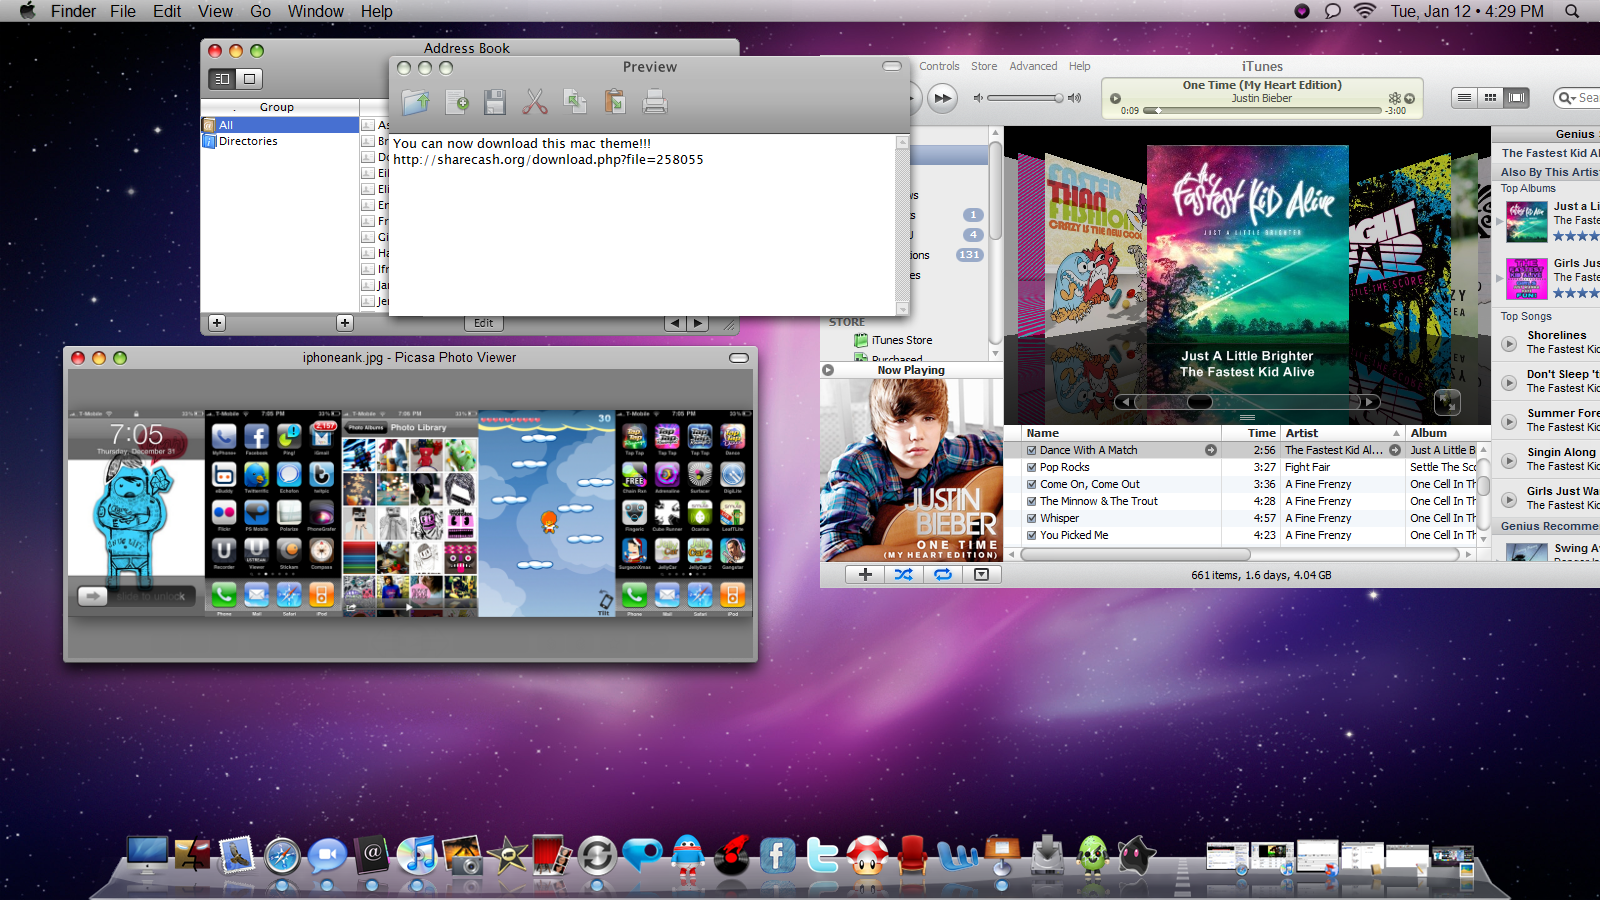 mac theme for windows 7